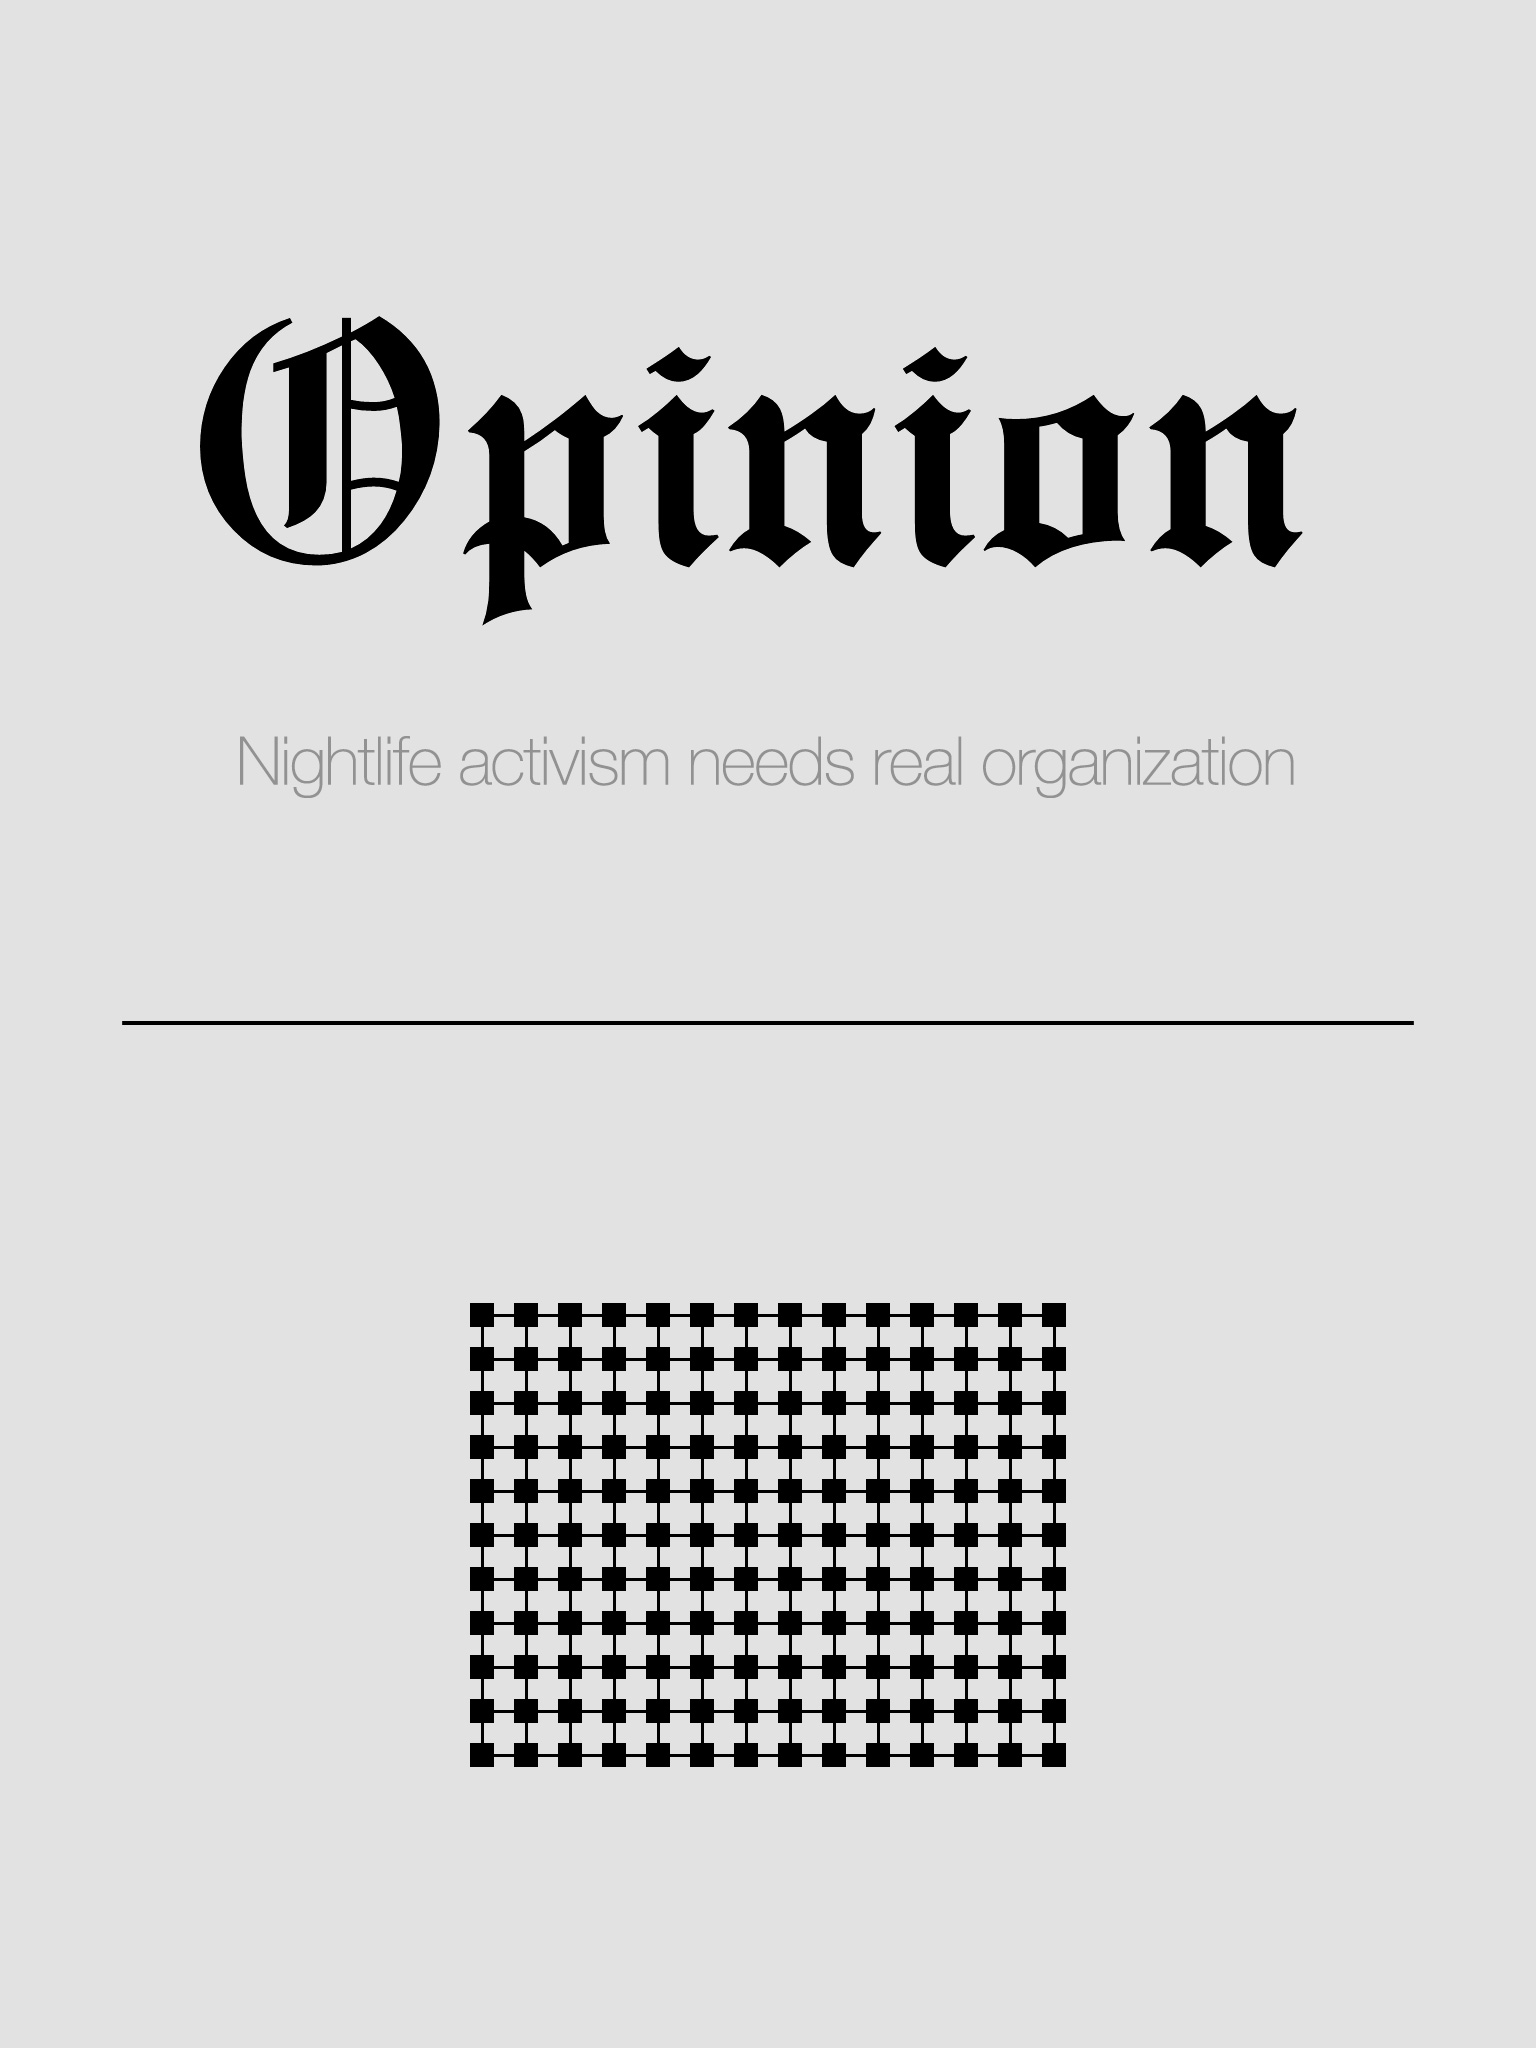 Opinion: Nightlife activism needs real organization